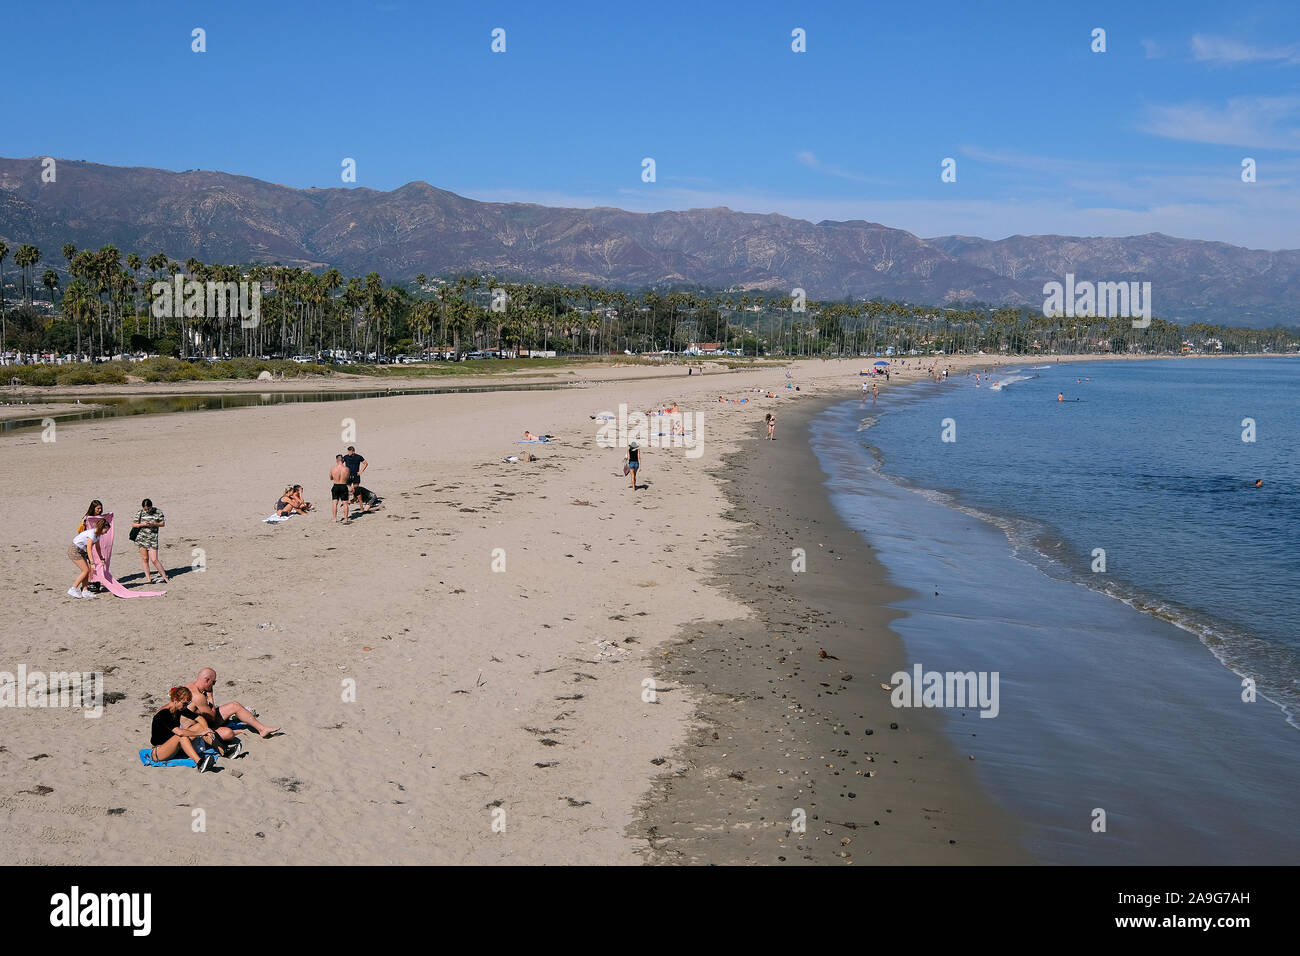 Beach of Santa Barbara with Santa Ynes Mountains, California, USA Stock Photo